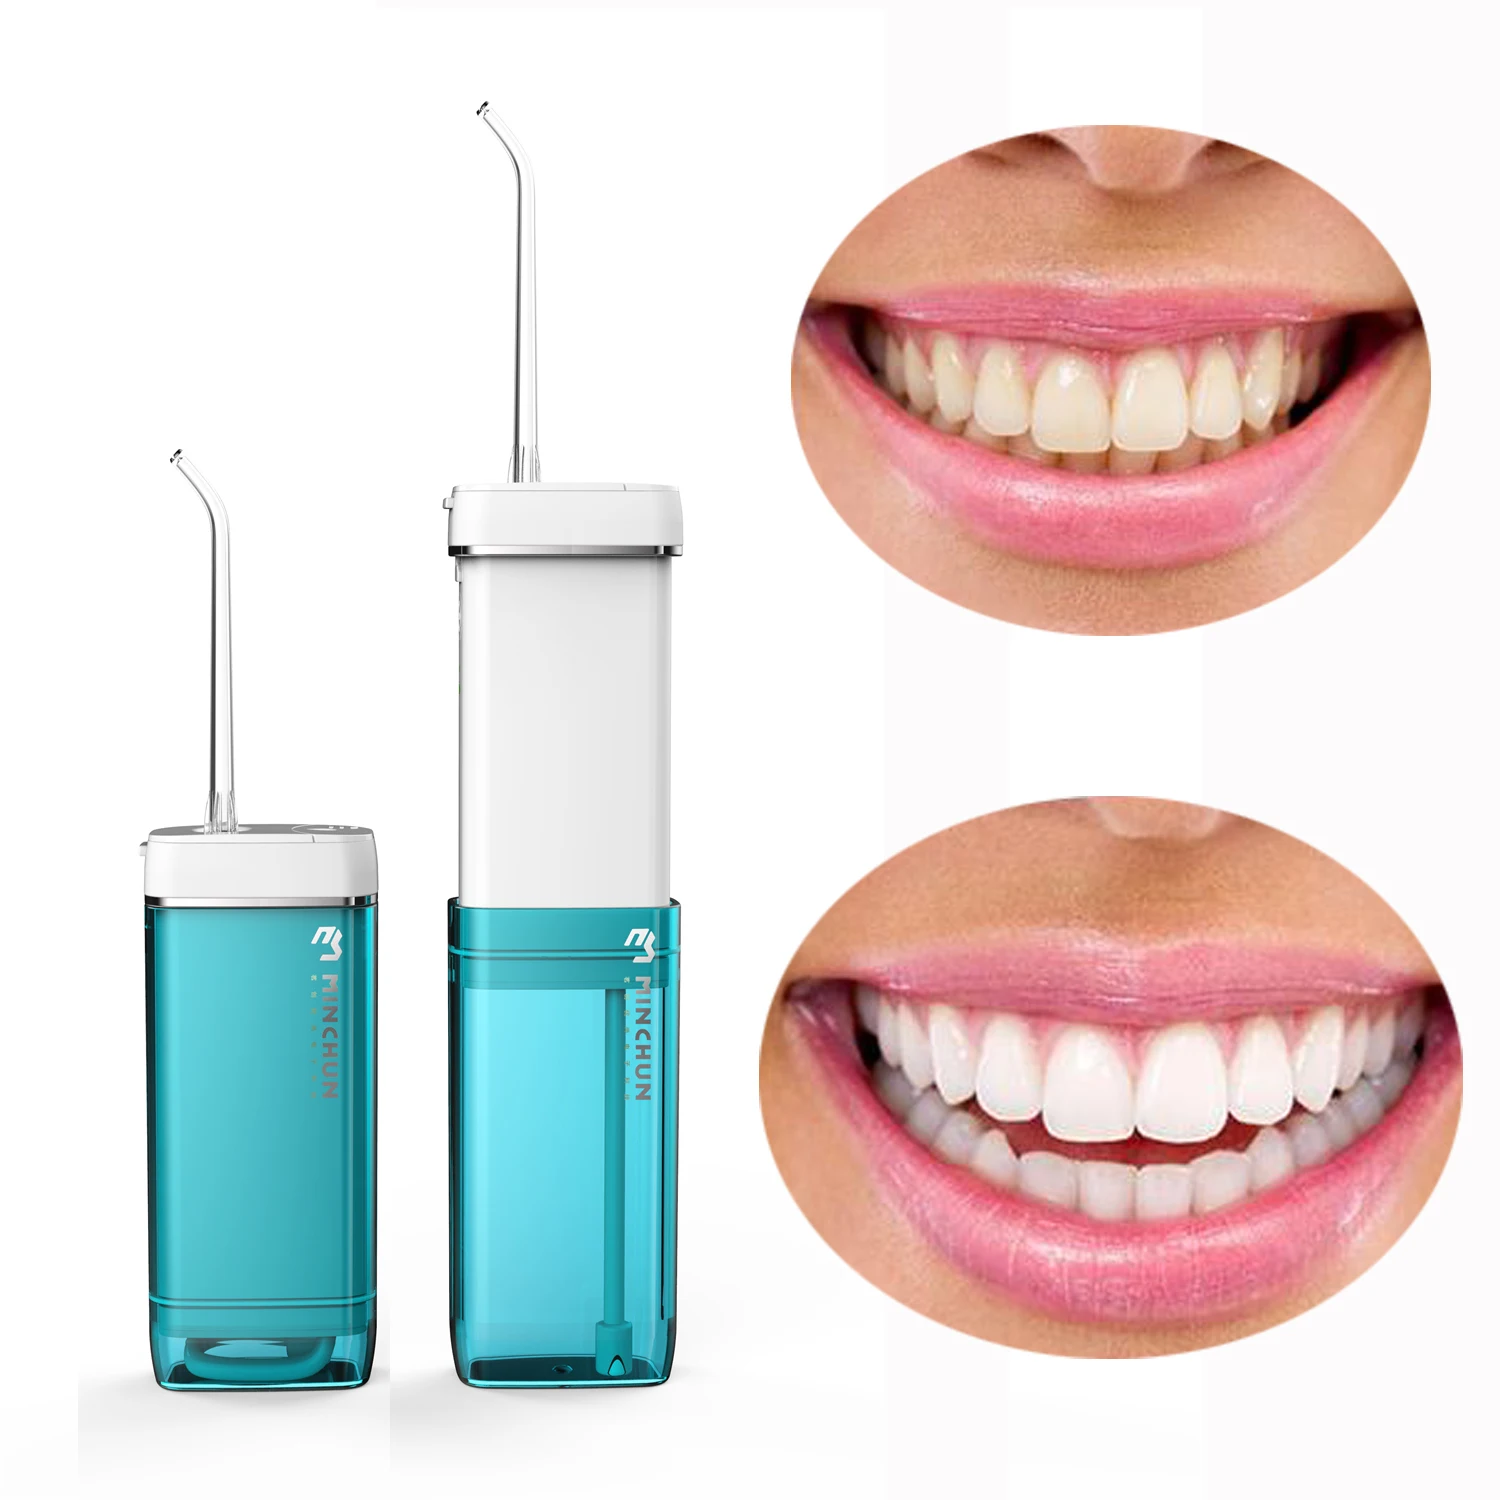 

Water Jet Floss Dental Irrigator Dental Pick Oral Irrigation Cleaning Machine with 130ml water tank dental water flosser, White/pink/blue